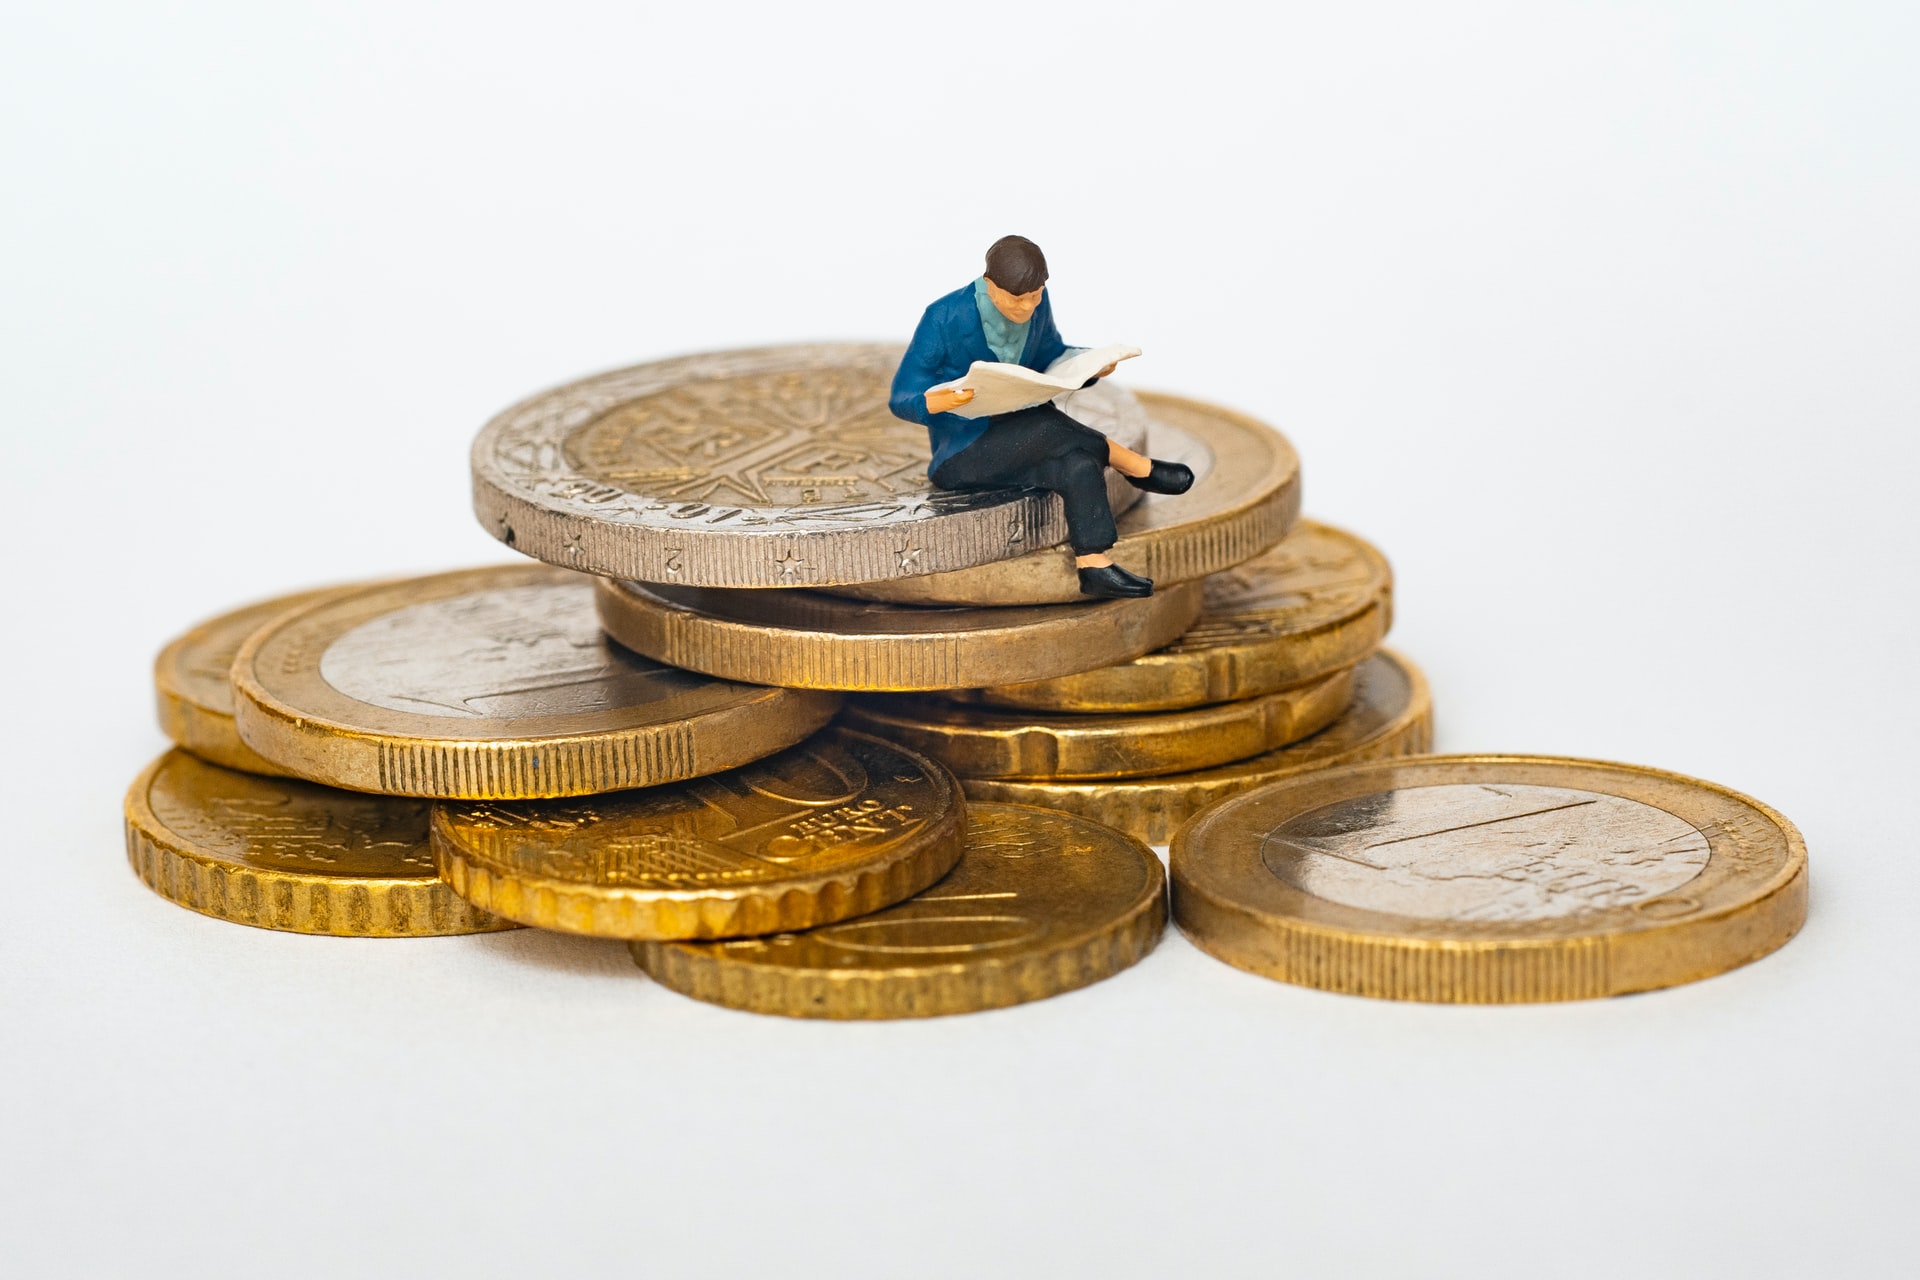 figurine sitting on coins